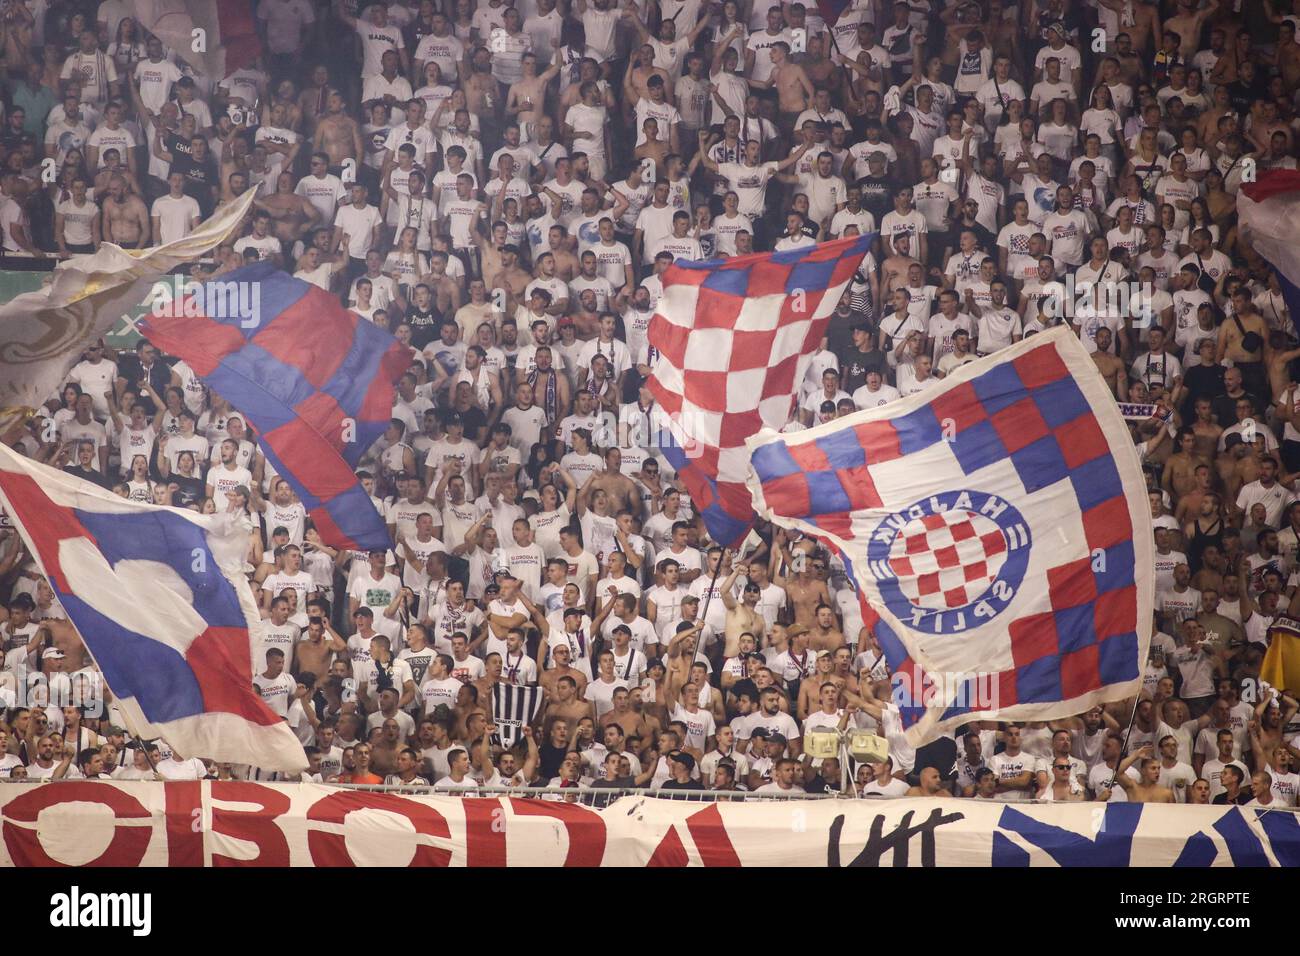 Hajduk split hi-res stock photography and images - Alamy